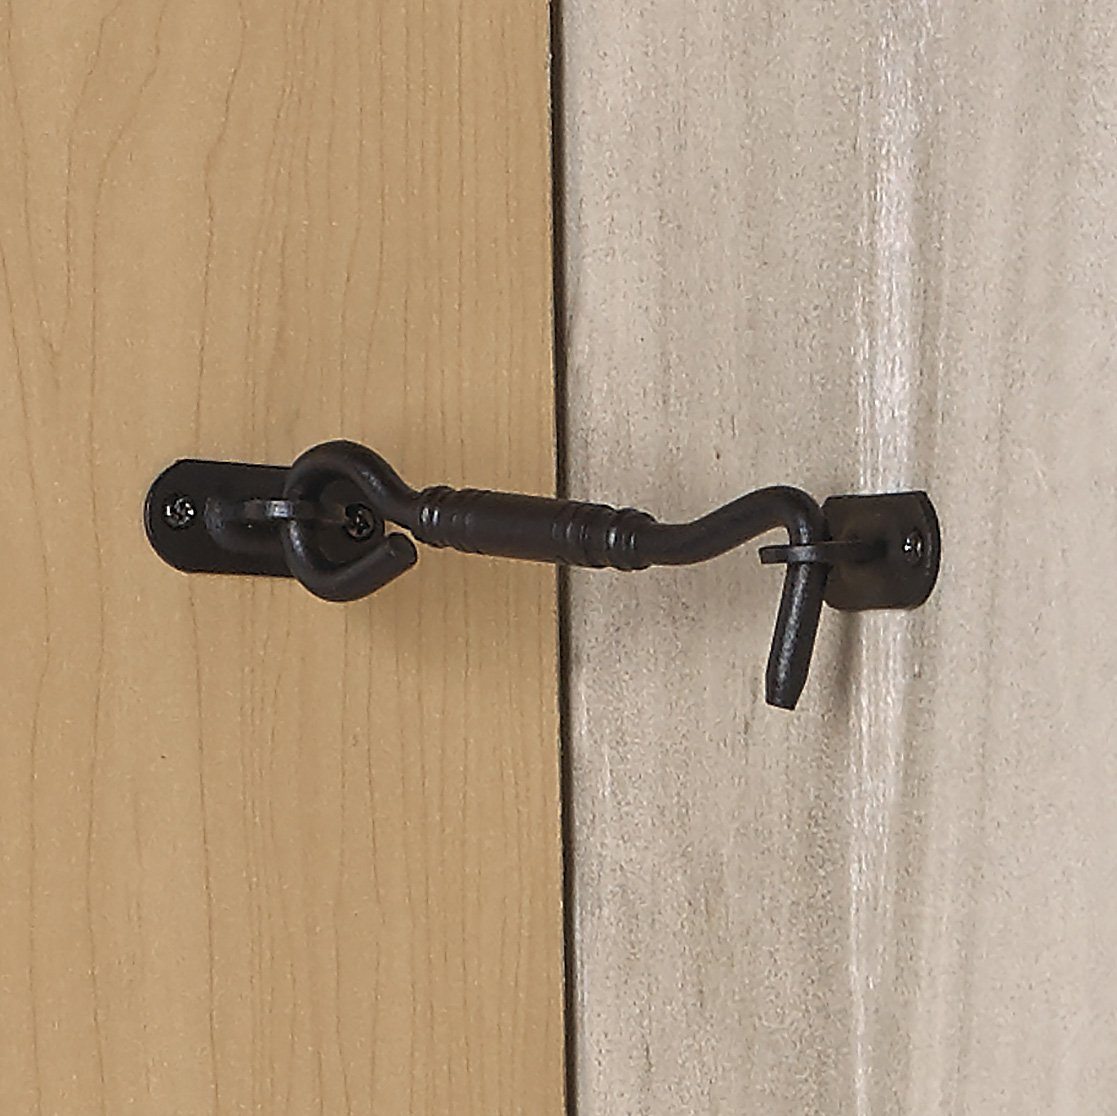 Enhancing Security and Style: Matte Black Heavy-Duty Barn Door Lock Eye  Latch Installation Guide 